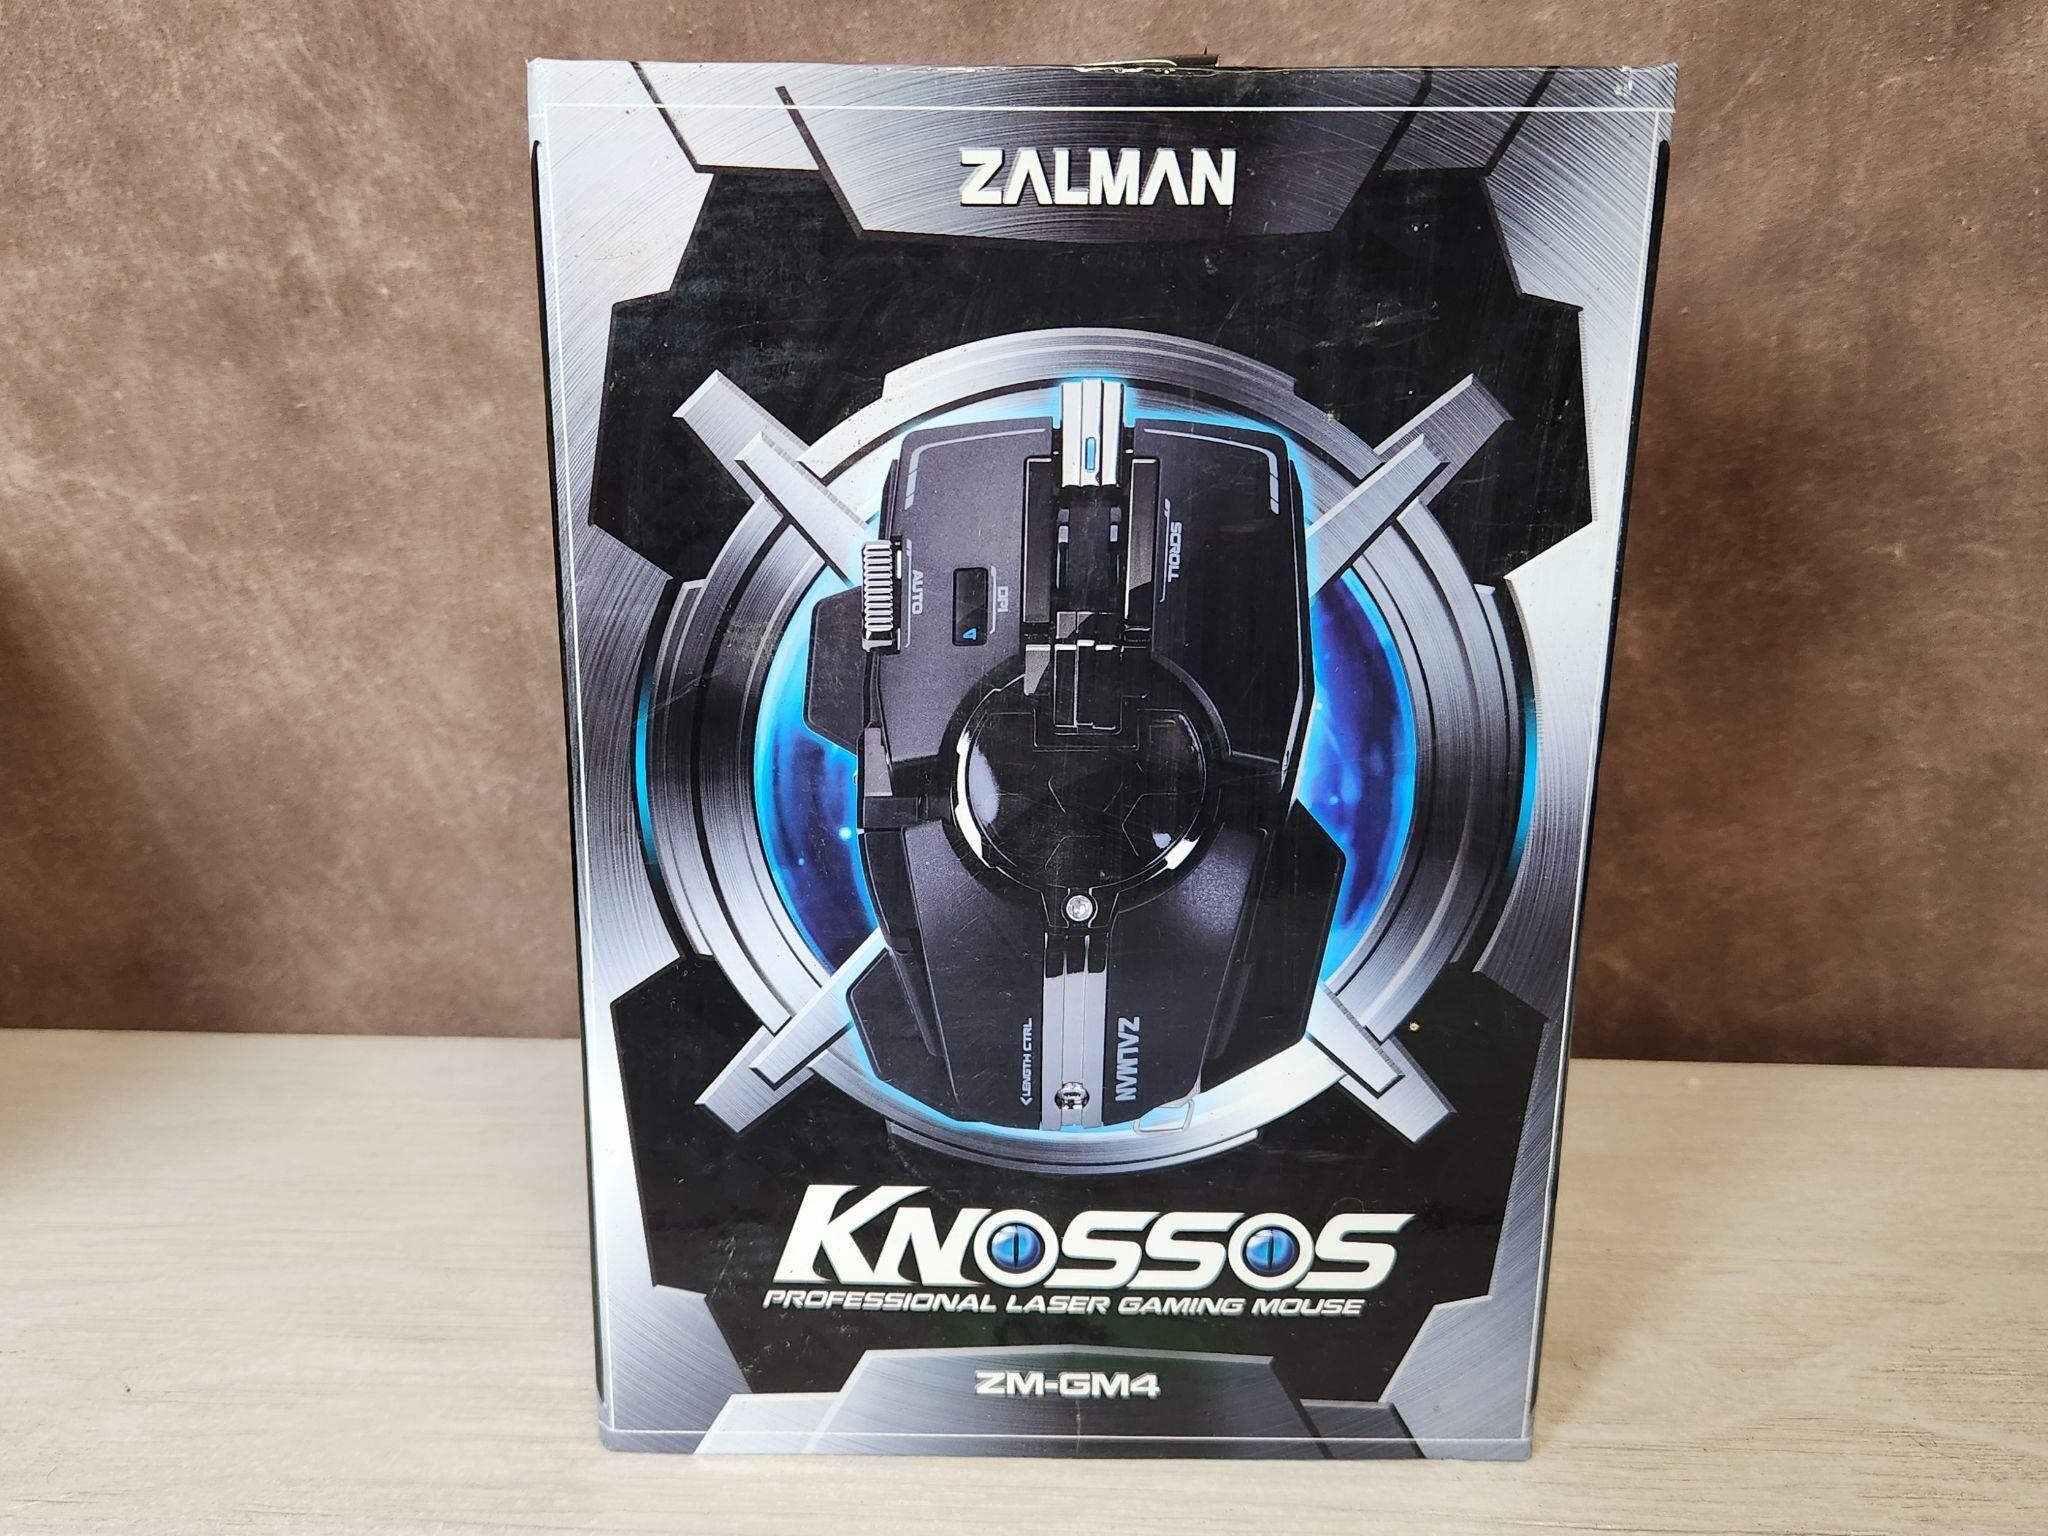 Nib Zalman Professional Laser Gaming Mouse